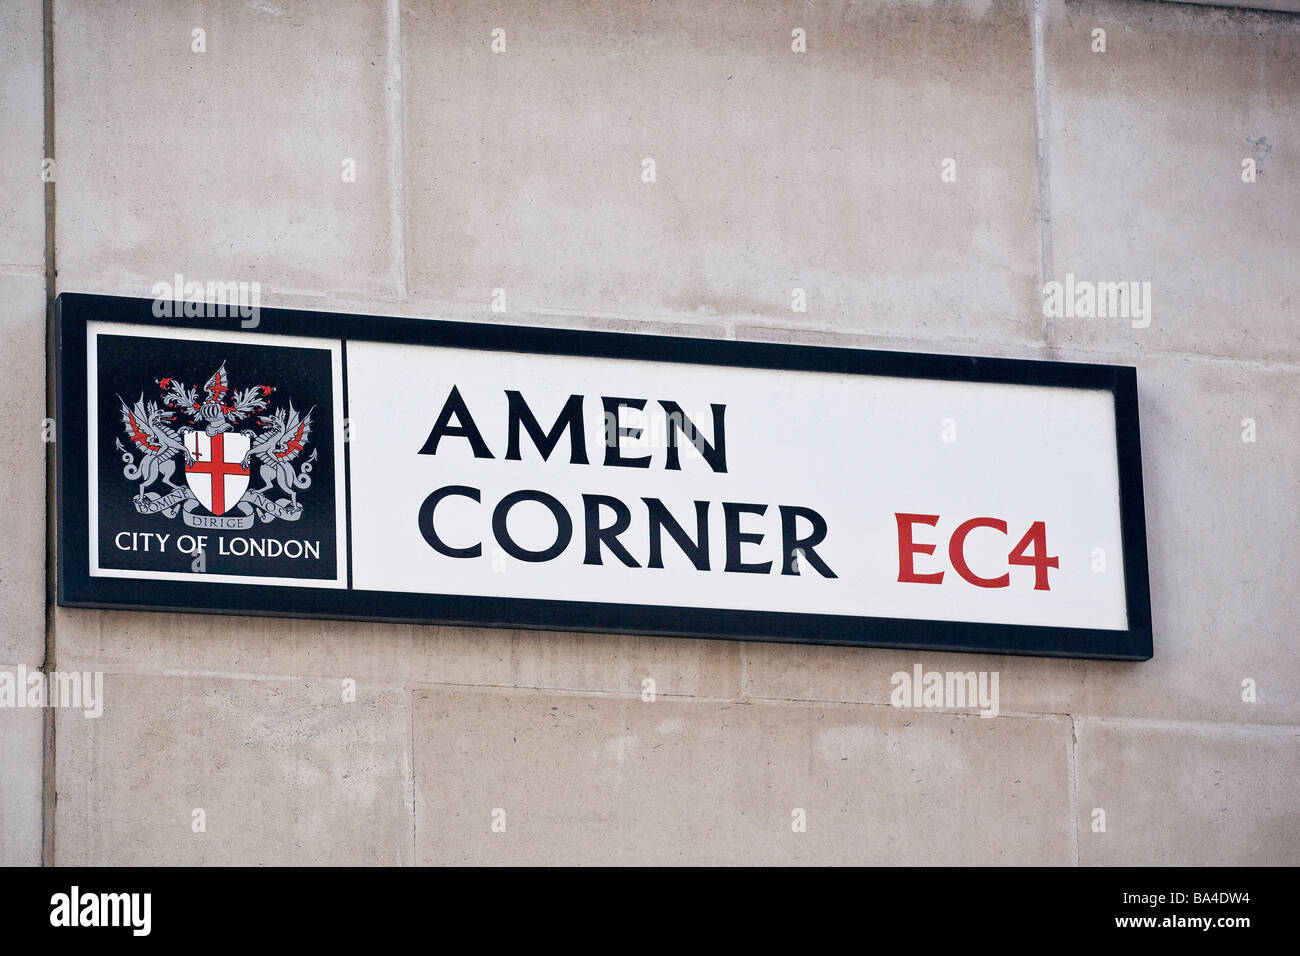 Amen Corner, London EC4 street sign. Stock Photo